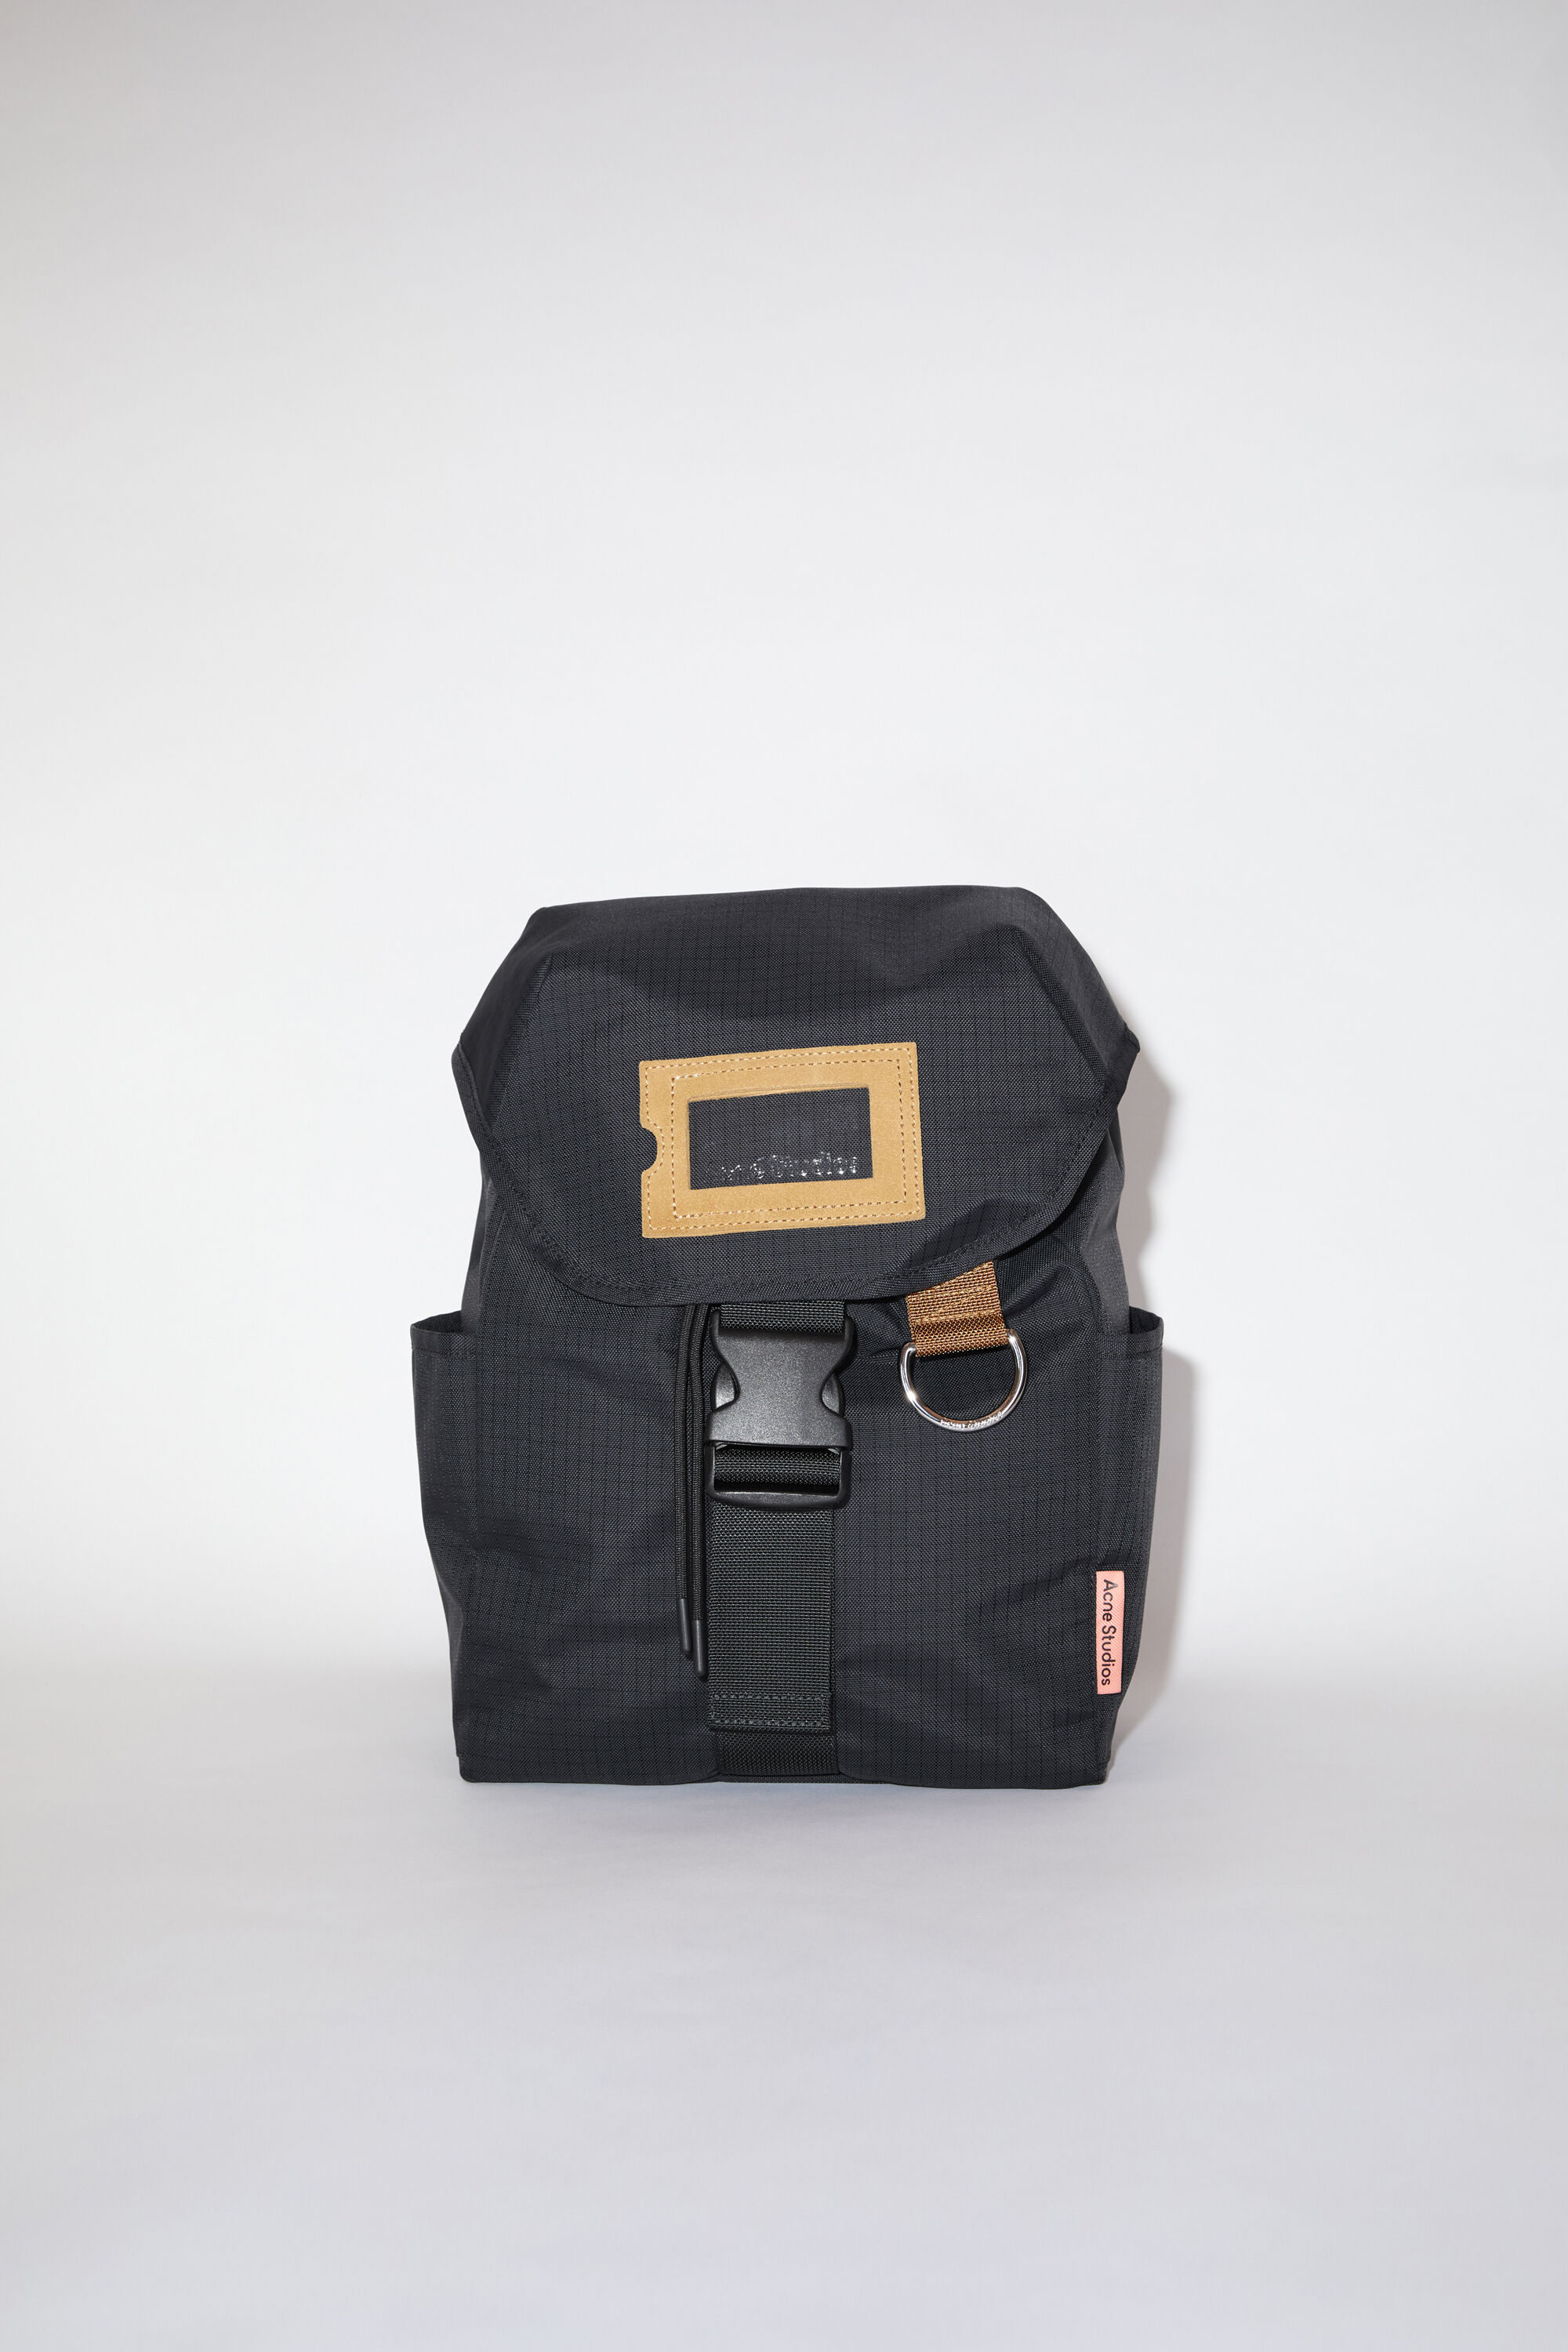 Ripstop nylon backpack